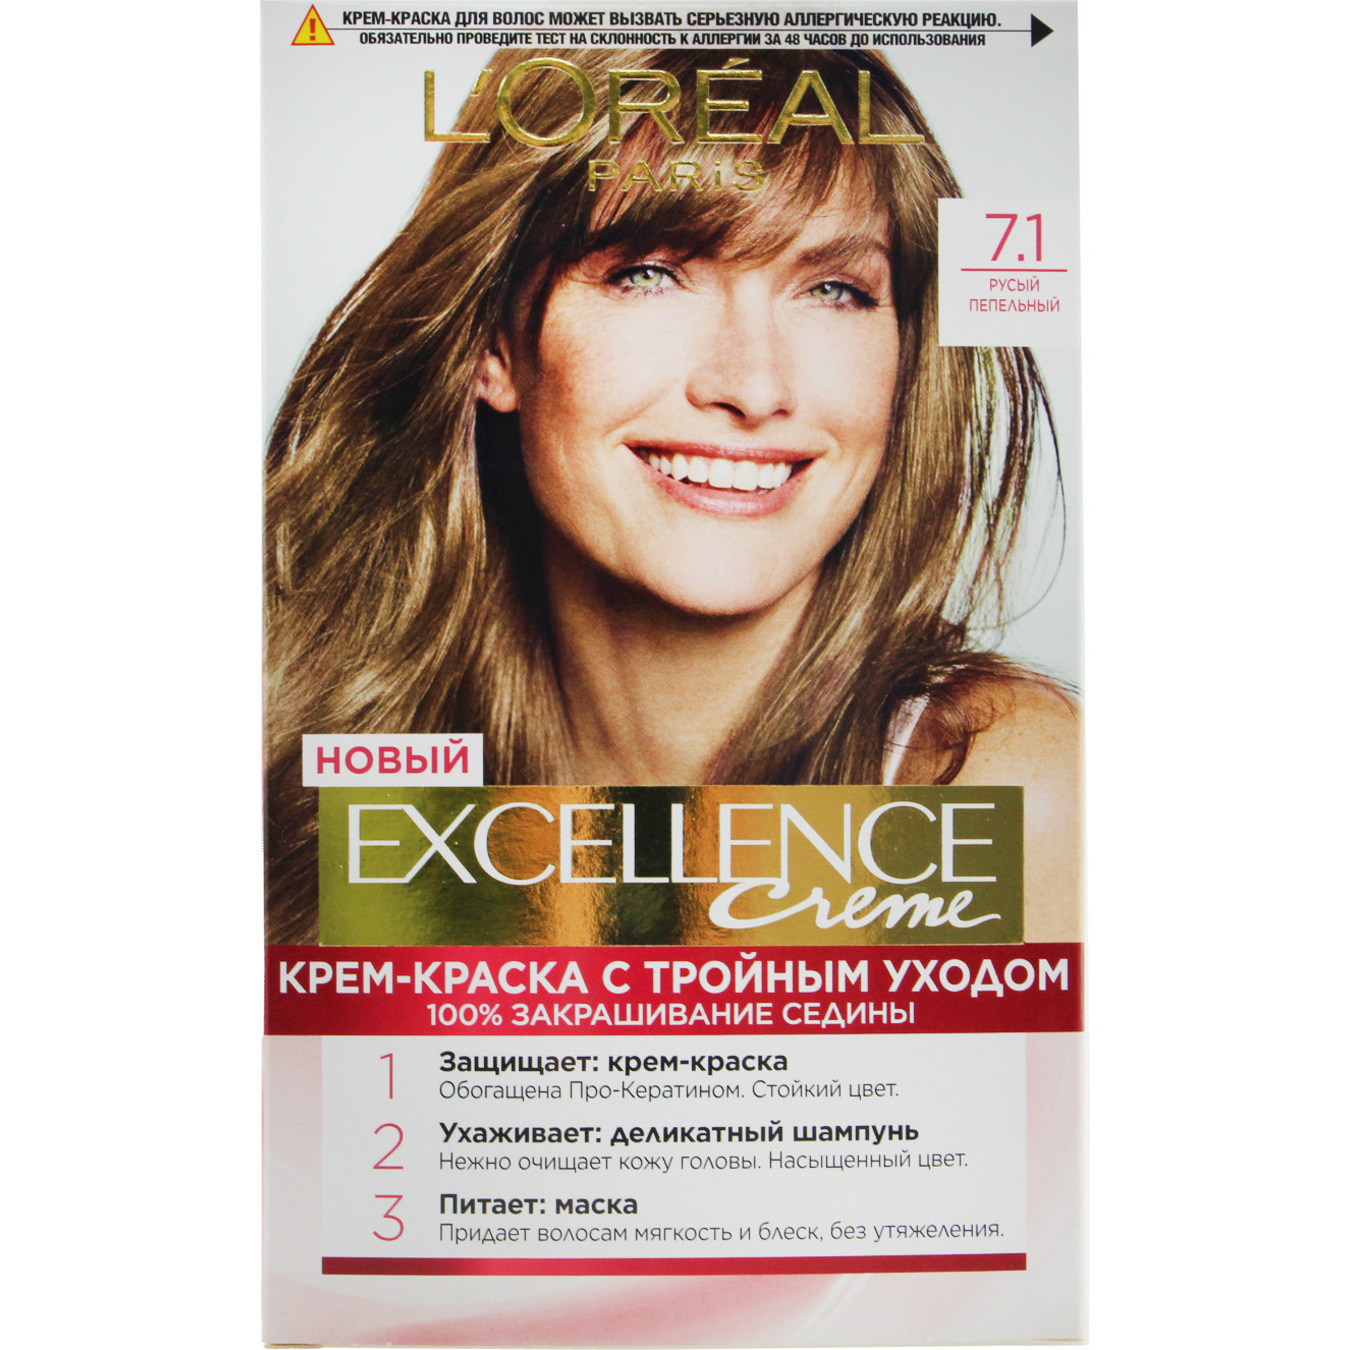 Крем-фарба для волосся L'Oreal Excellence Creme 7.1 Русявий попелястий